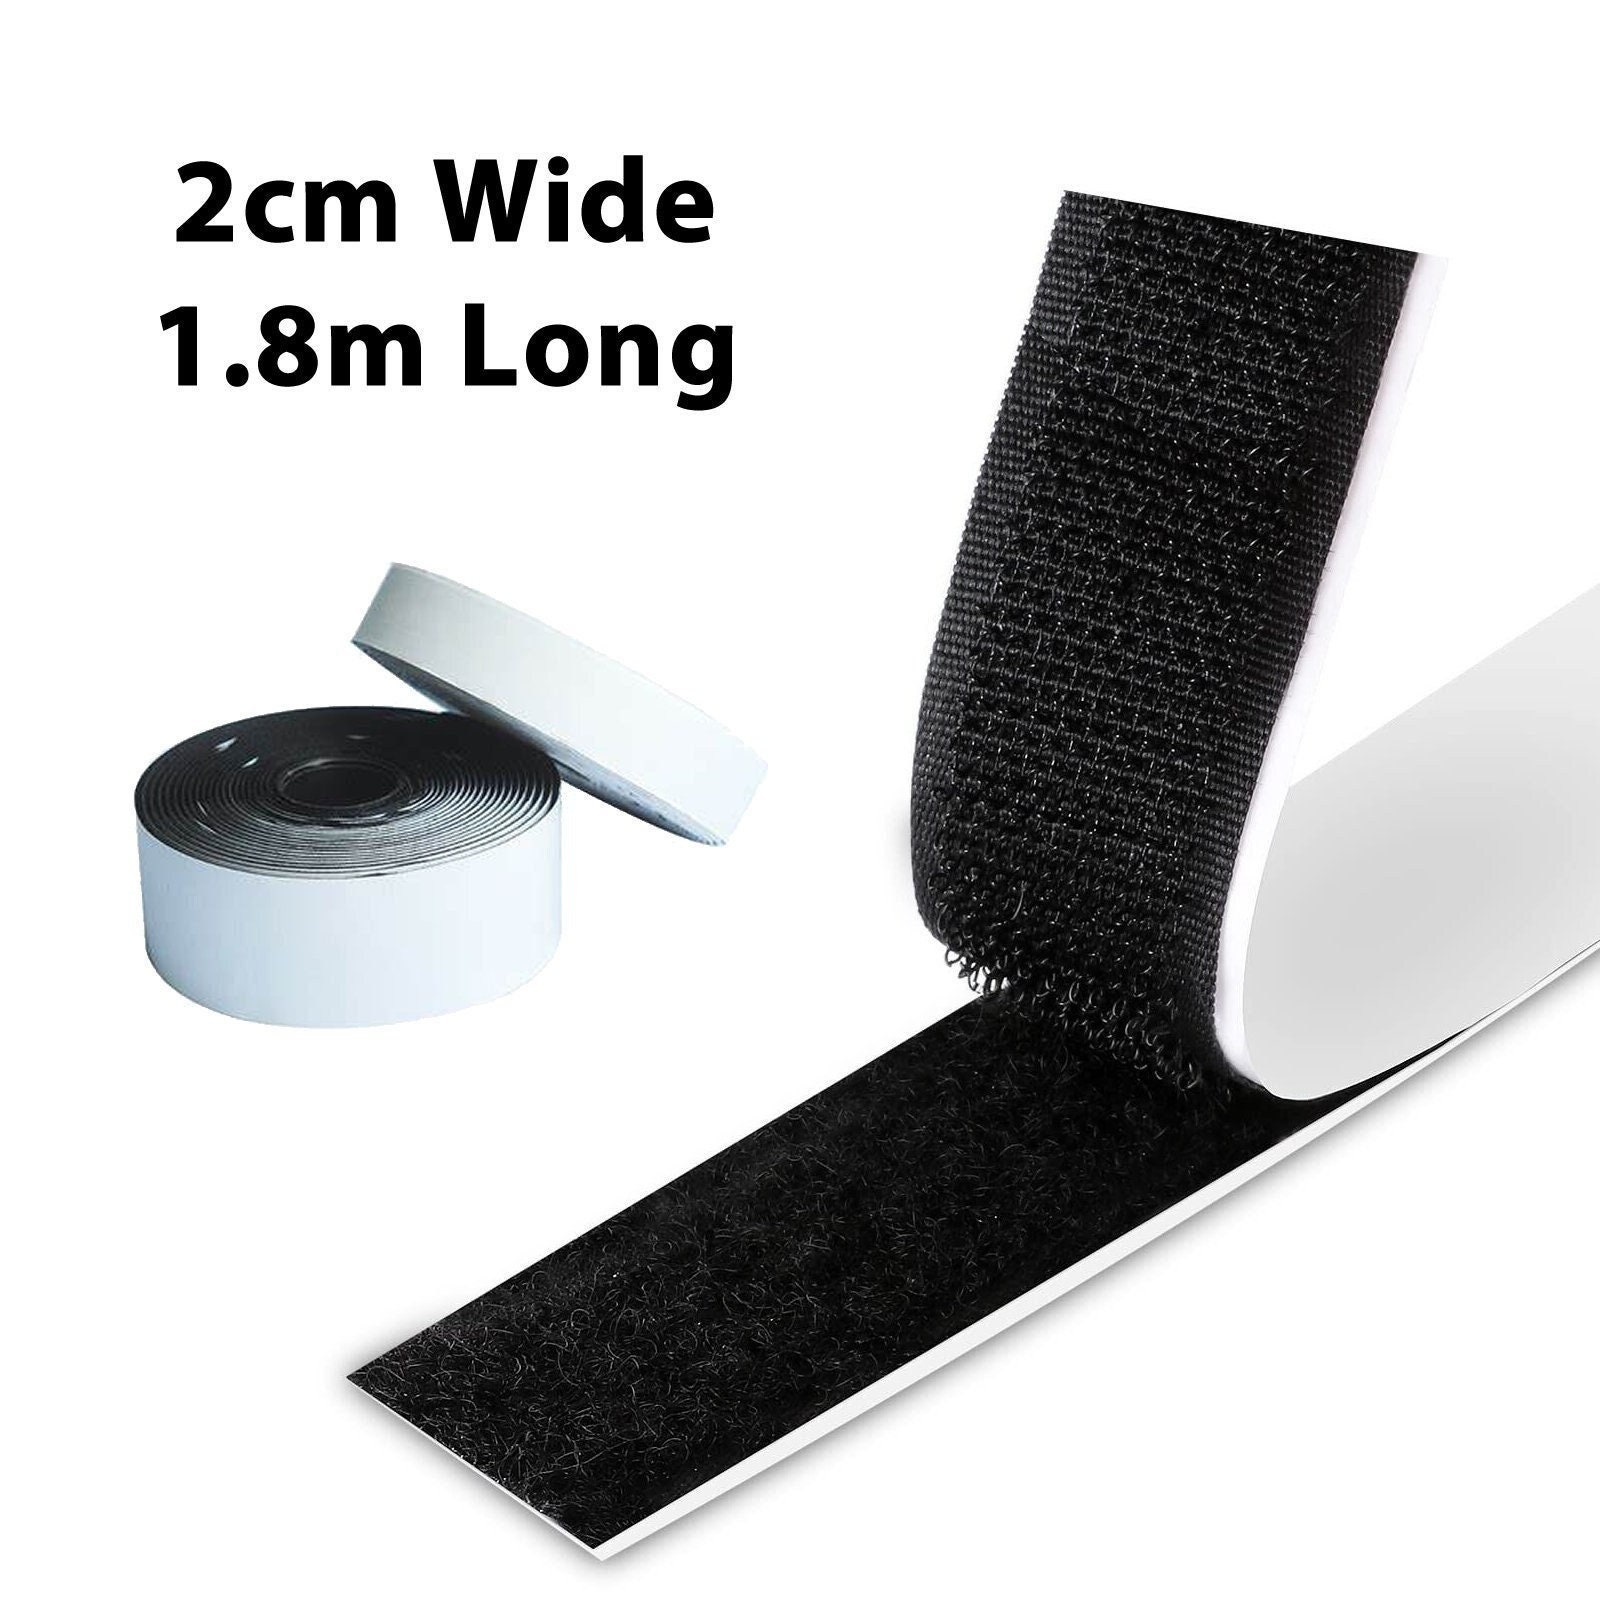 Teal & Black No.5 Size Zipper Tape 